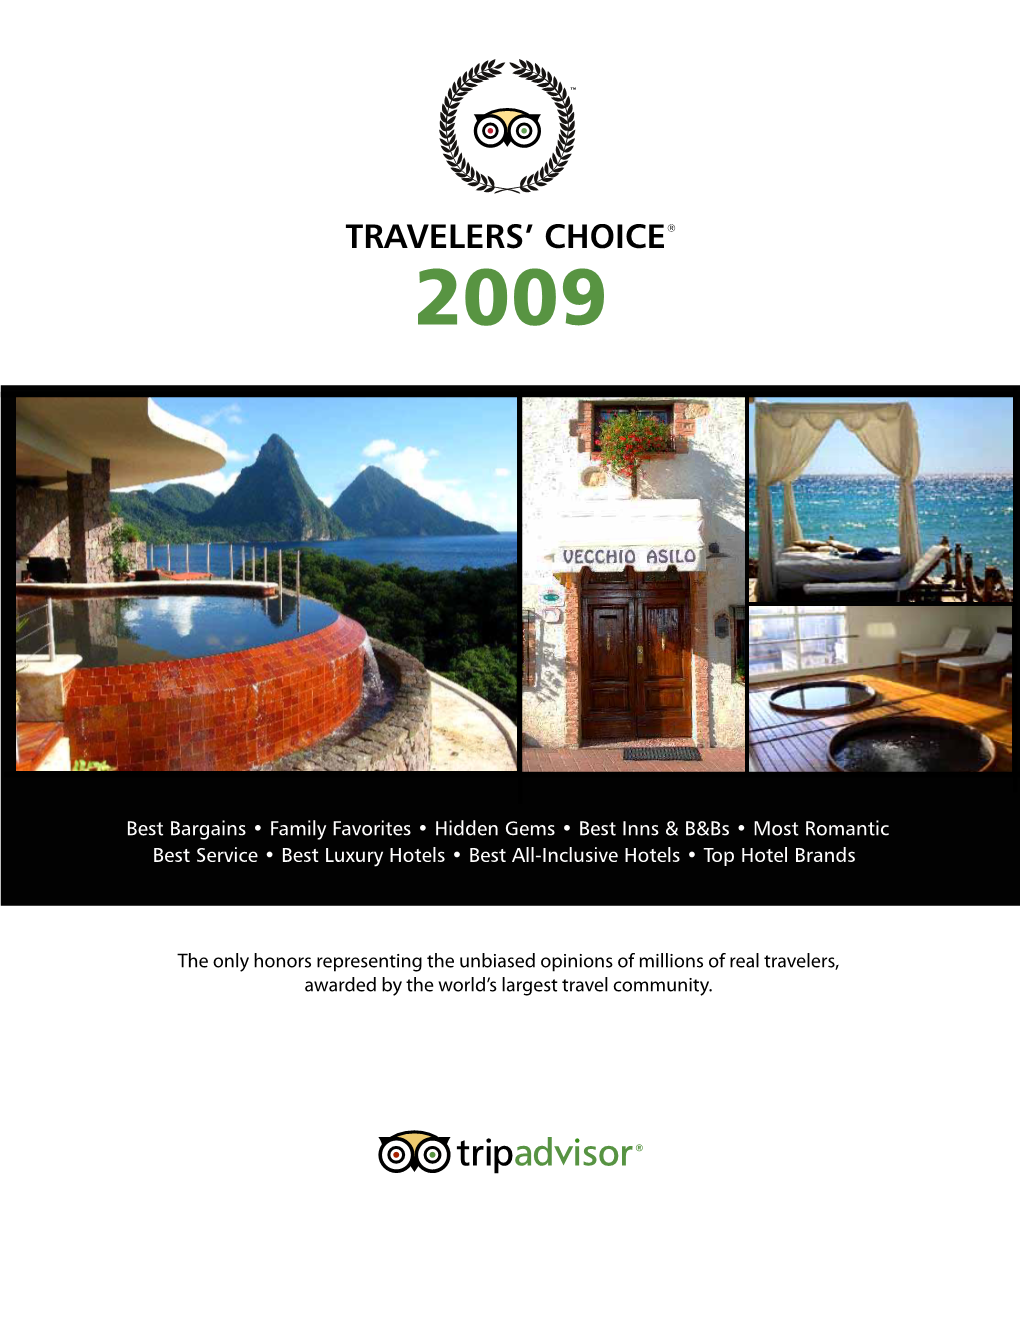 Travelers' Choice 2009